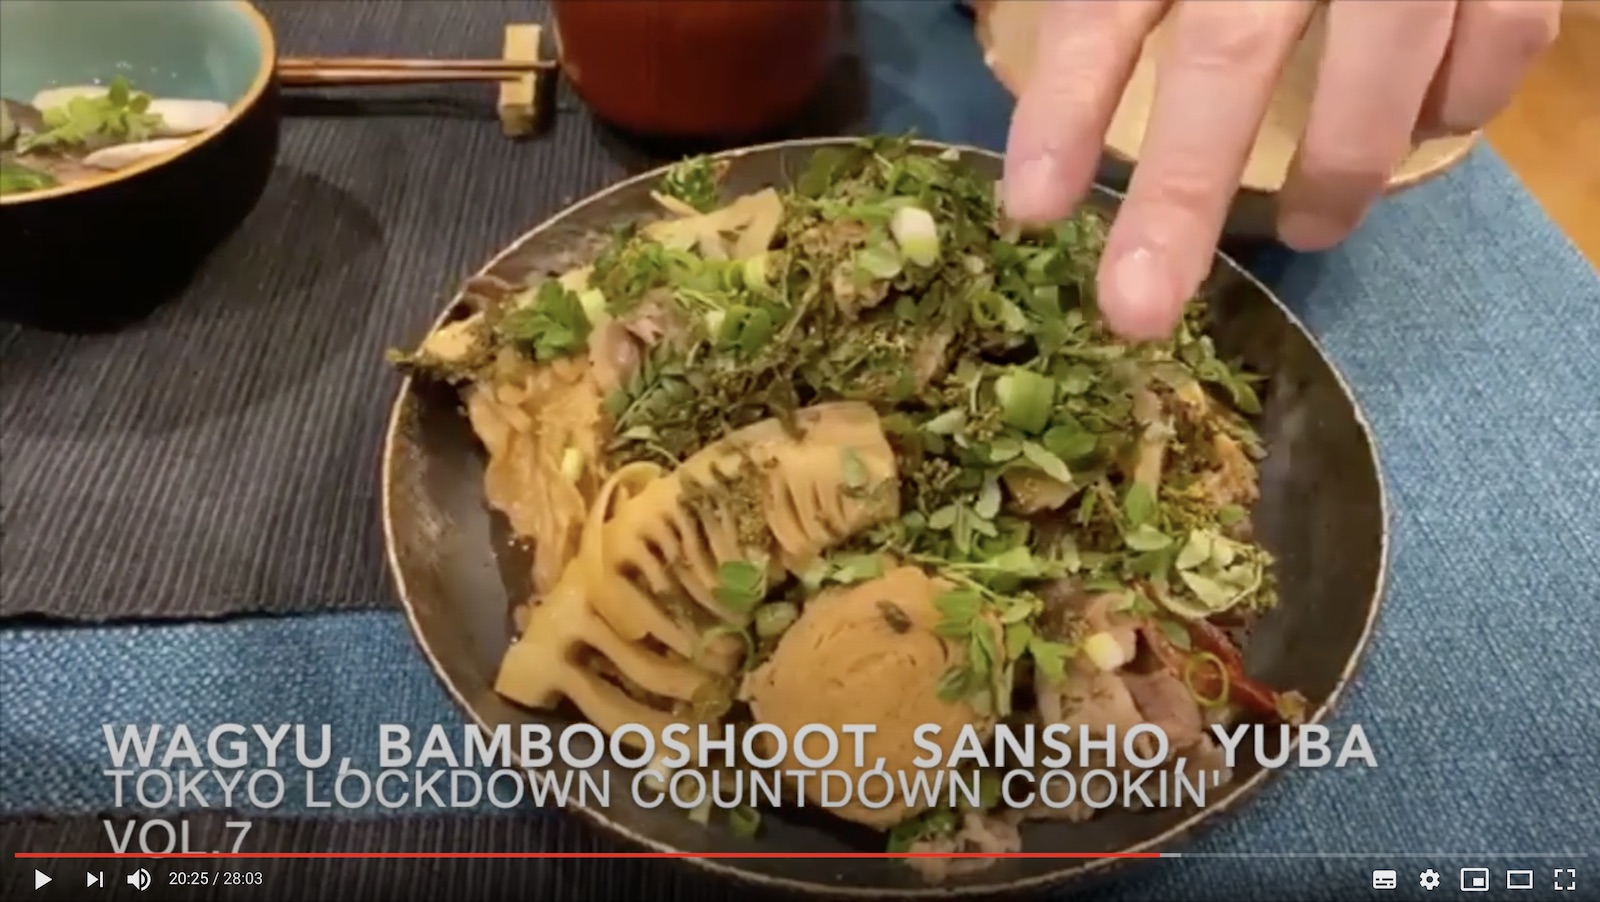 Tokyo Lockdown Countdown Cookin’ vol.7：和牛、タケノコ、山椒若葉、手鞠湯葉の煮もの